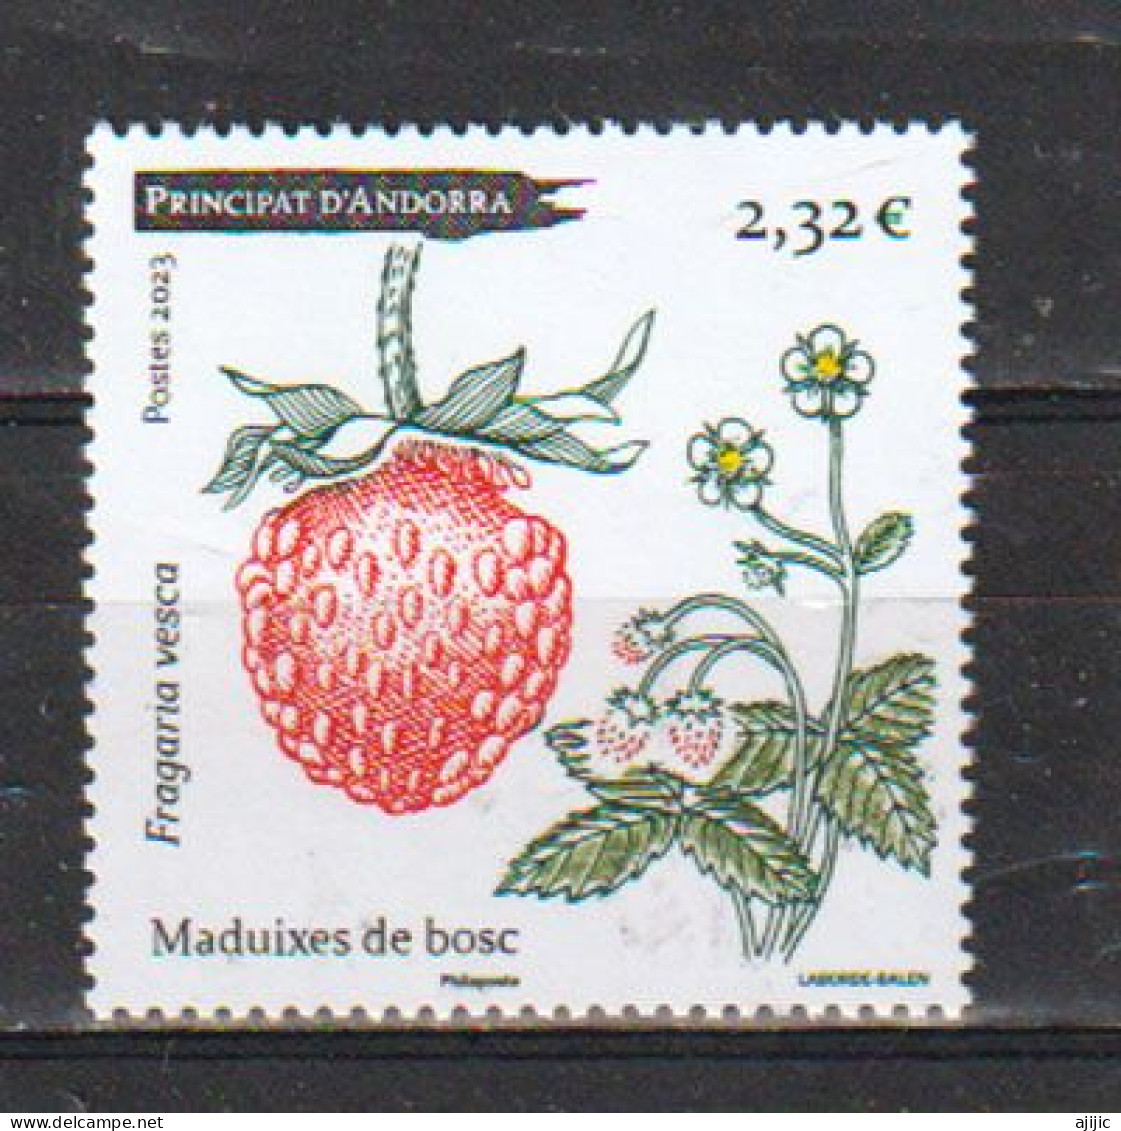 2023. ANDORRA. Wild Strawberry / Fraise Des Bois. Timbre Neuf ** Haute Faciale - Fruits